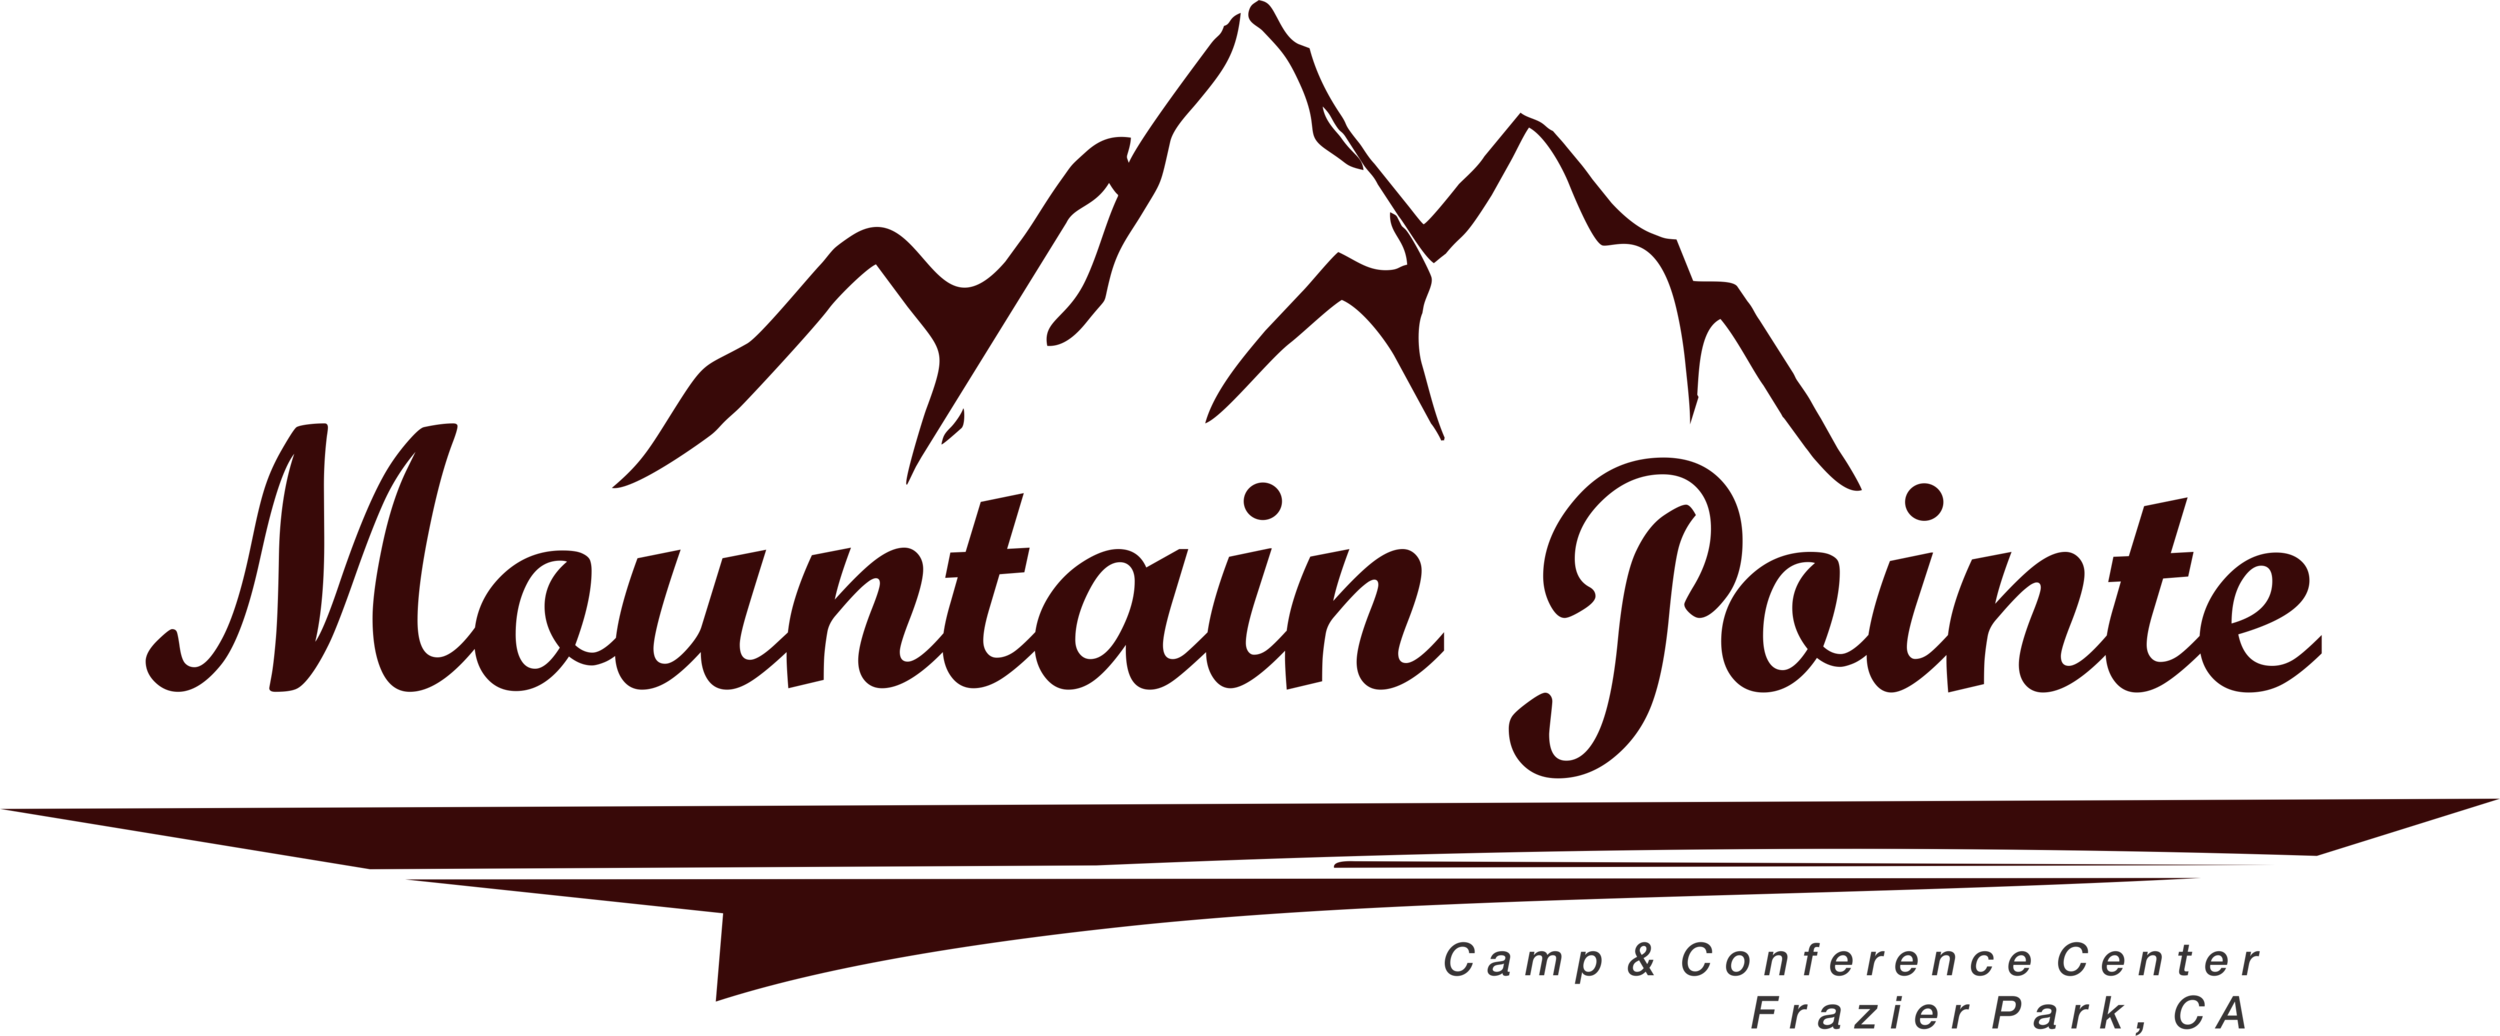 Mountain Pointe Camp